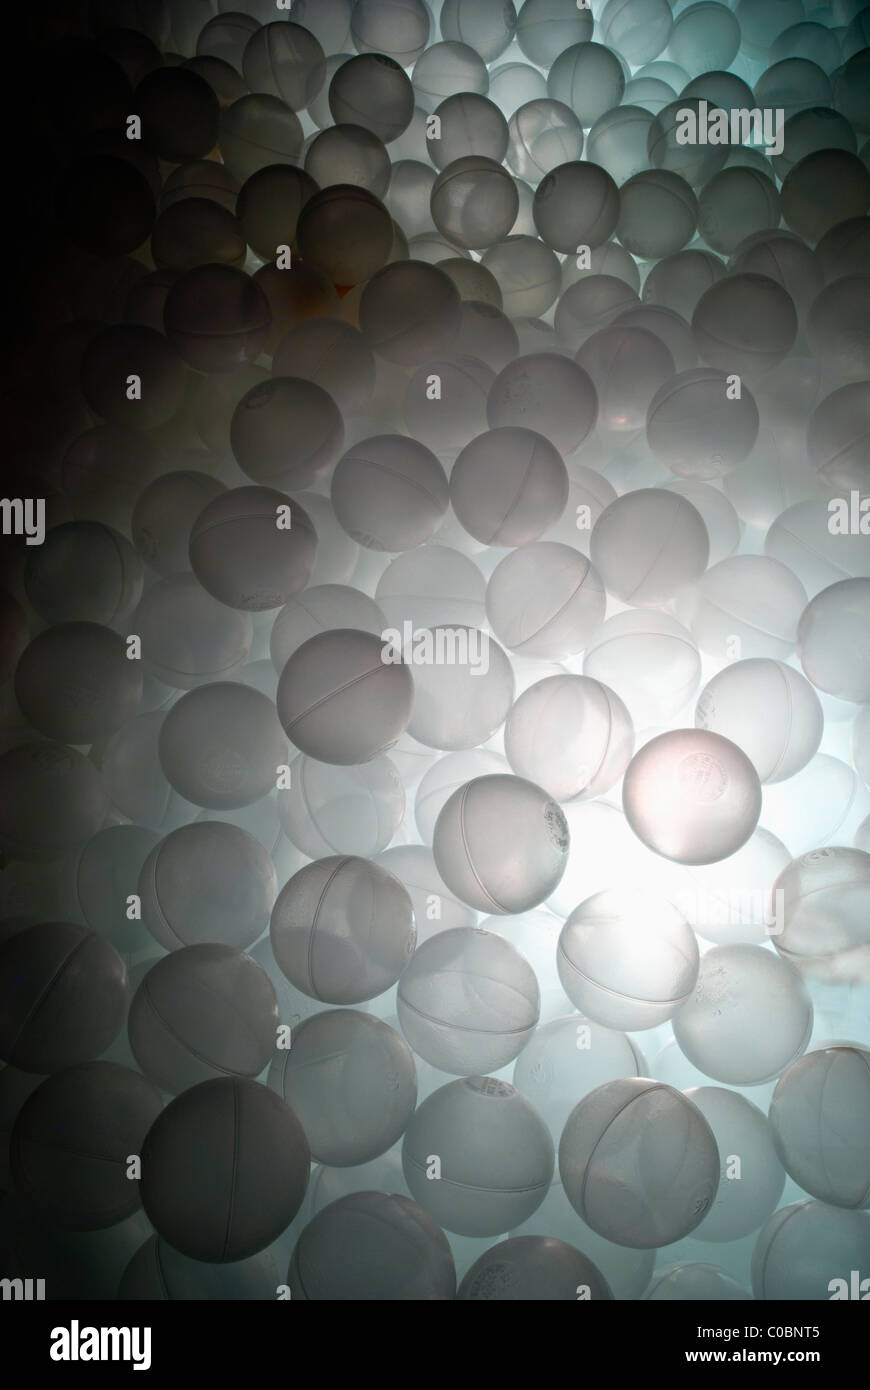 Ball pool in the light sensory room. Stock Photo